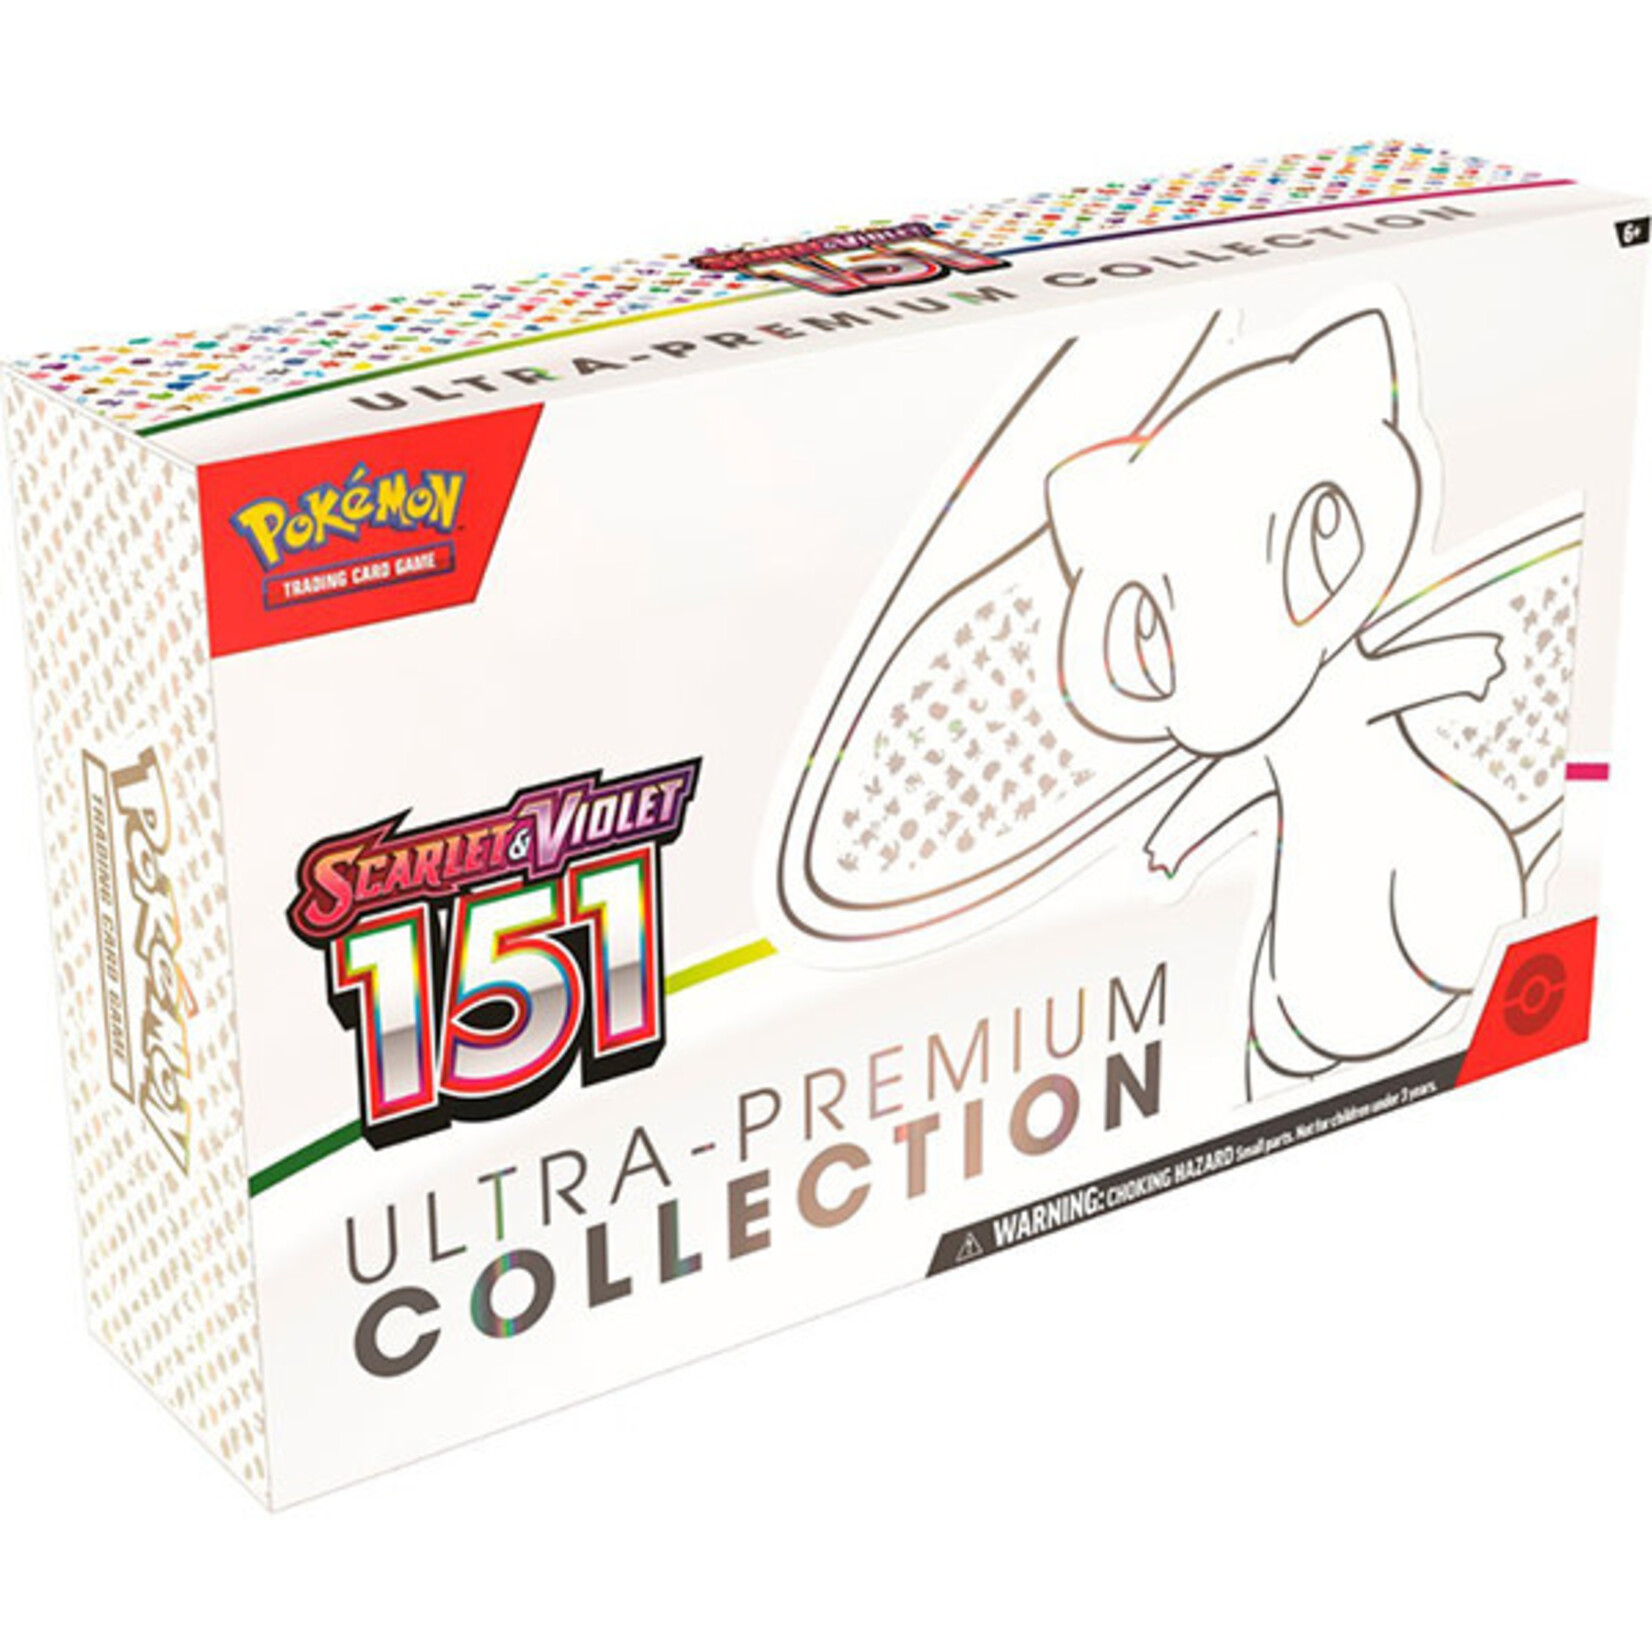 Pokemon - Pokemon 151 Ultra Premium Collection